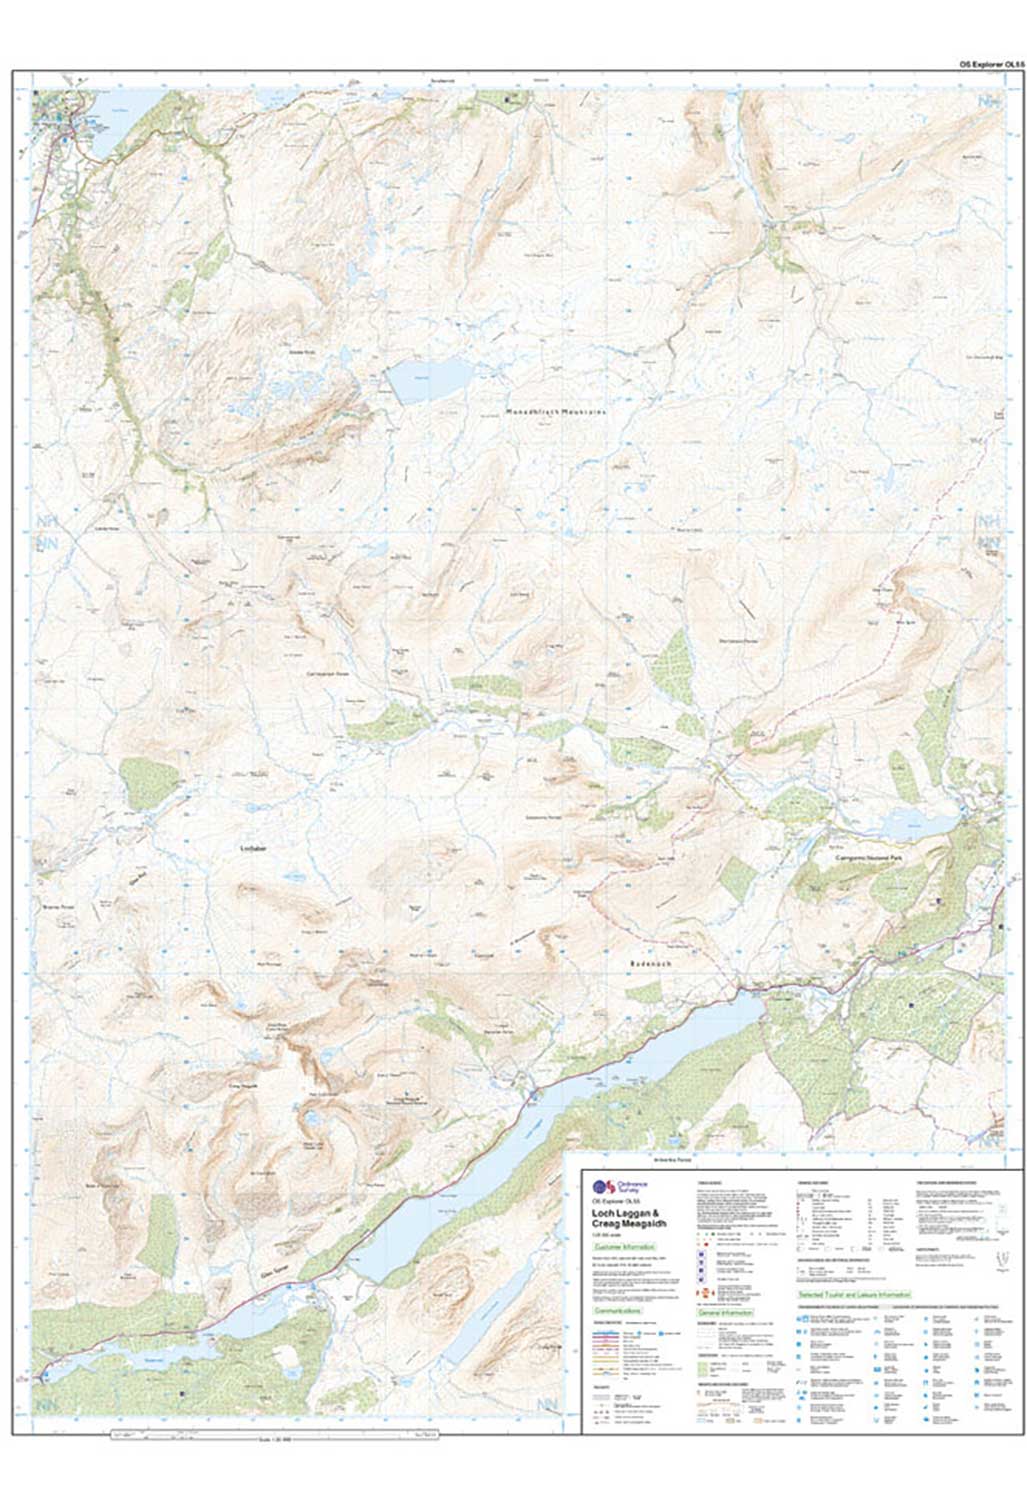 Ordnance Survey Loch Laggan & Creag Meagaidh, Corrieyairack Pass - OS Explorer Active OL55 Map